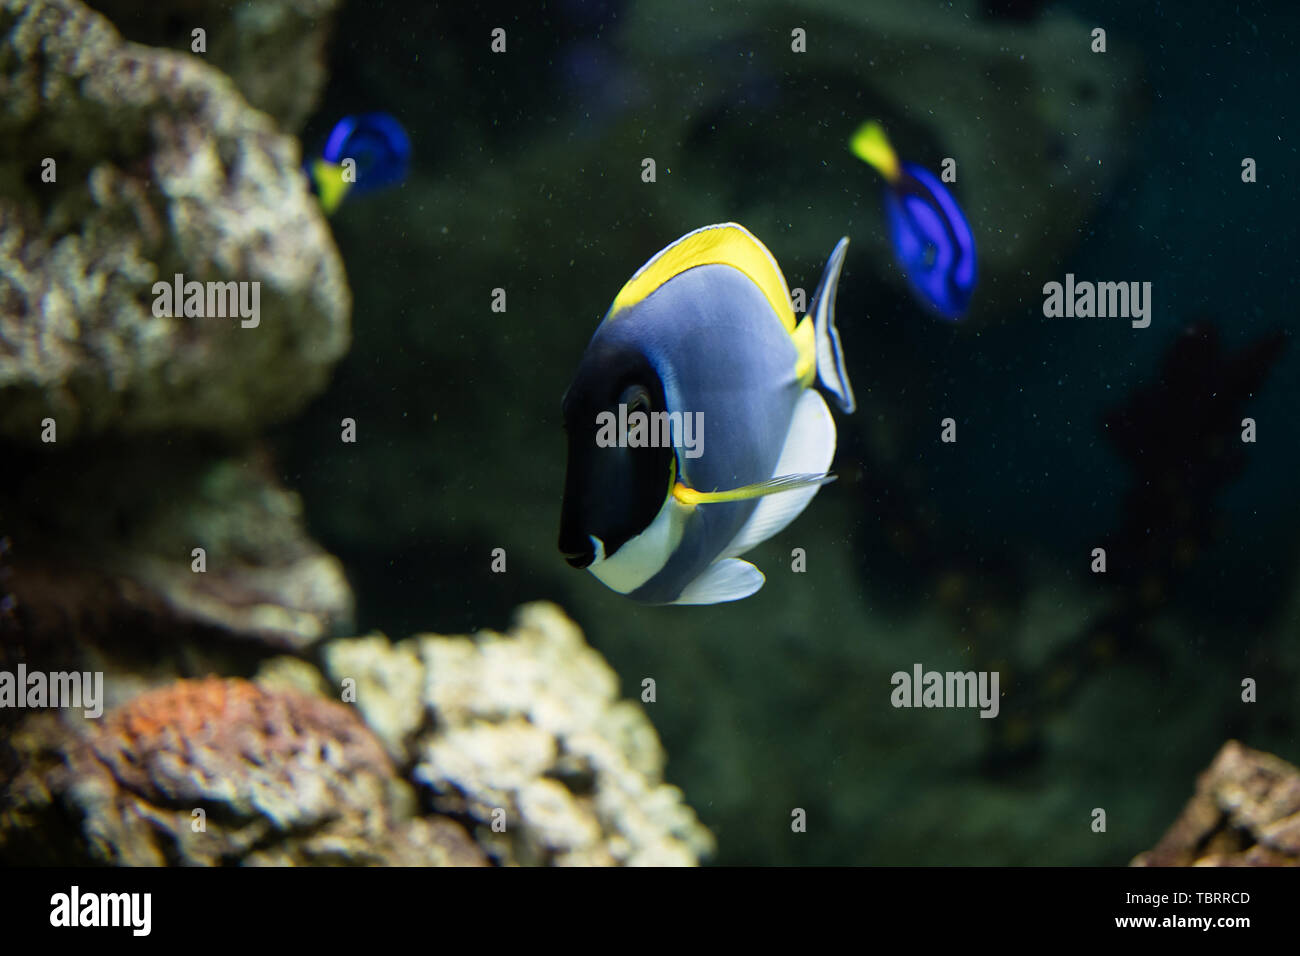 Sea anemone and clown fish in marine aquarium. On black background Stock Photo